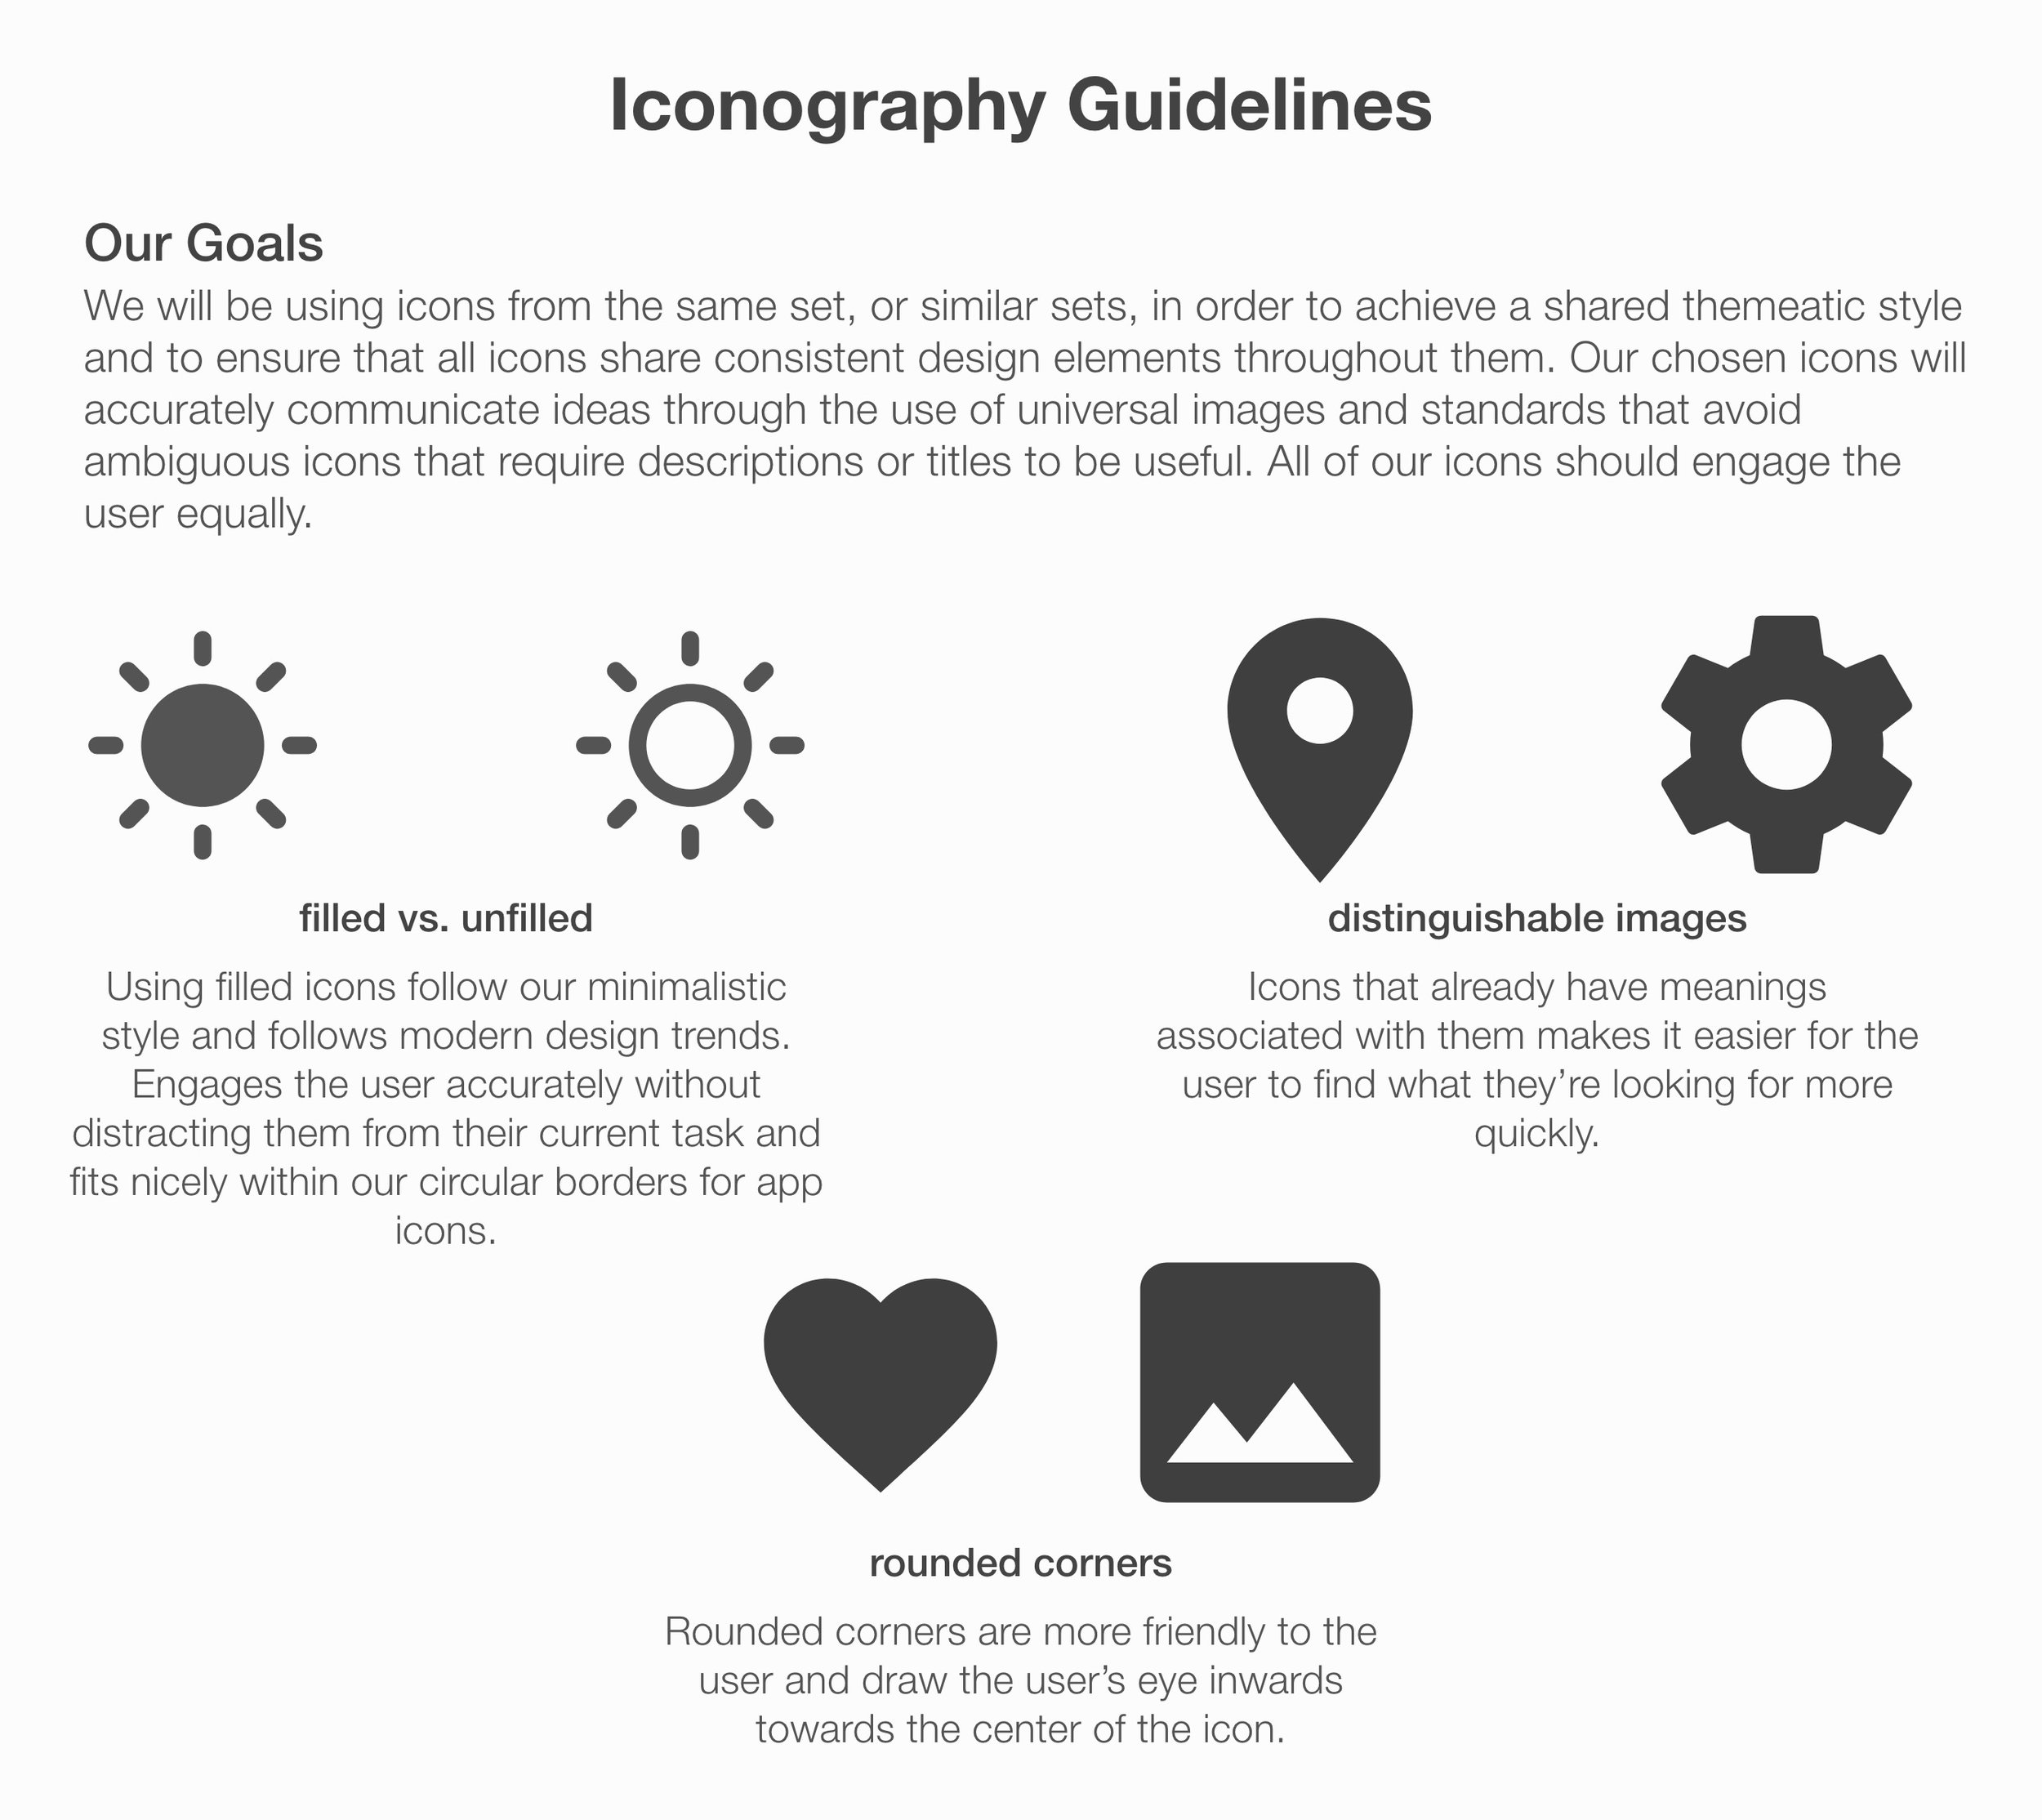 iconography guidelines@2x.jpeg